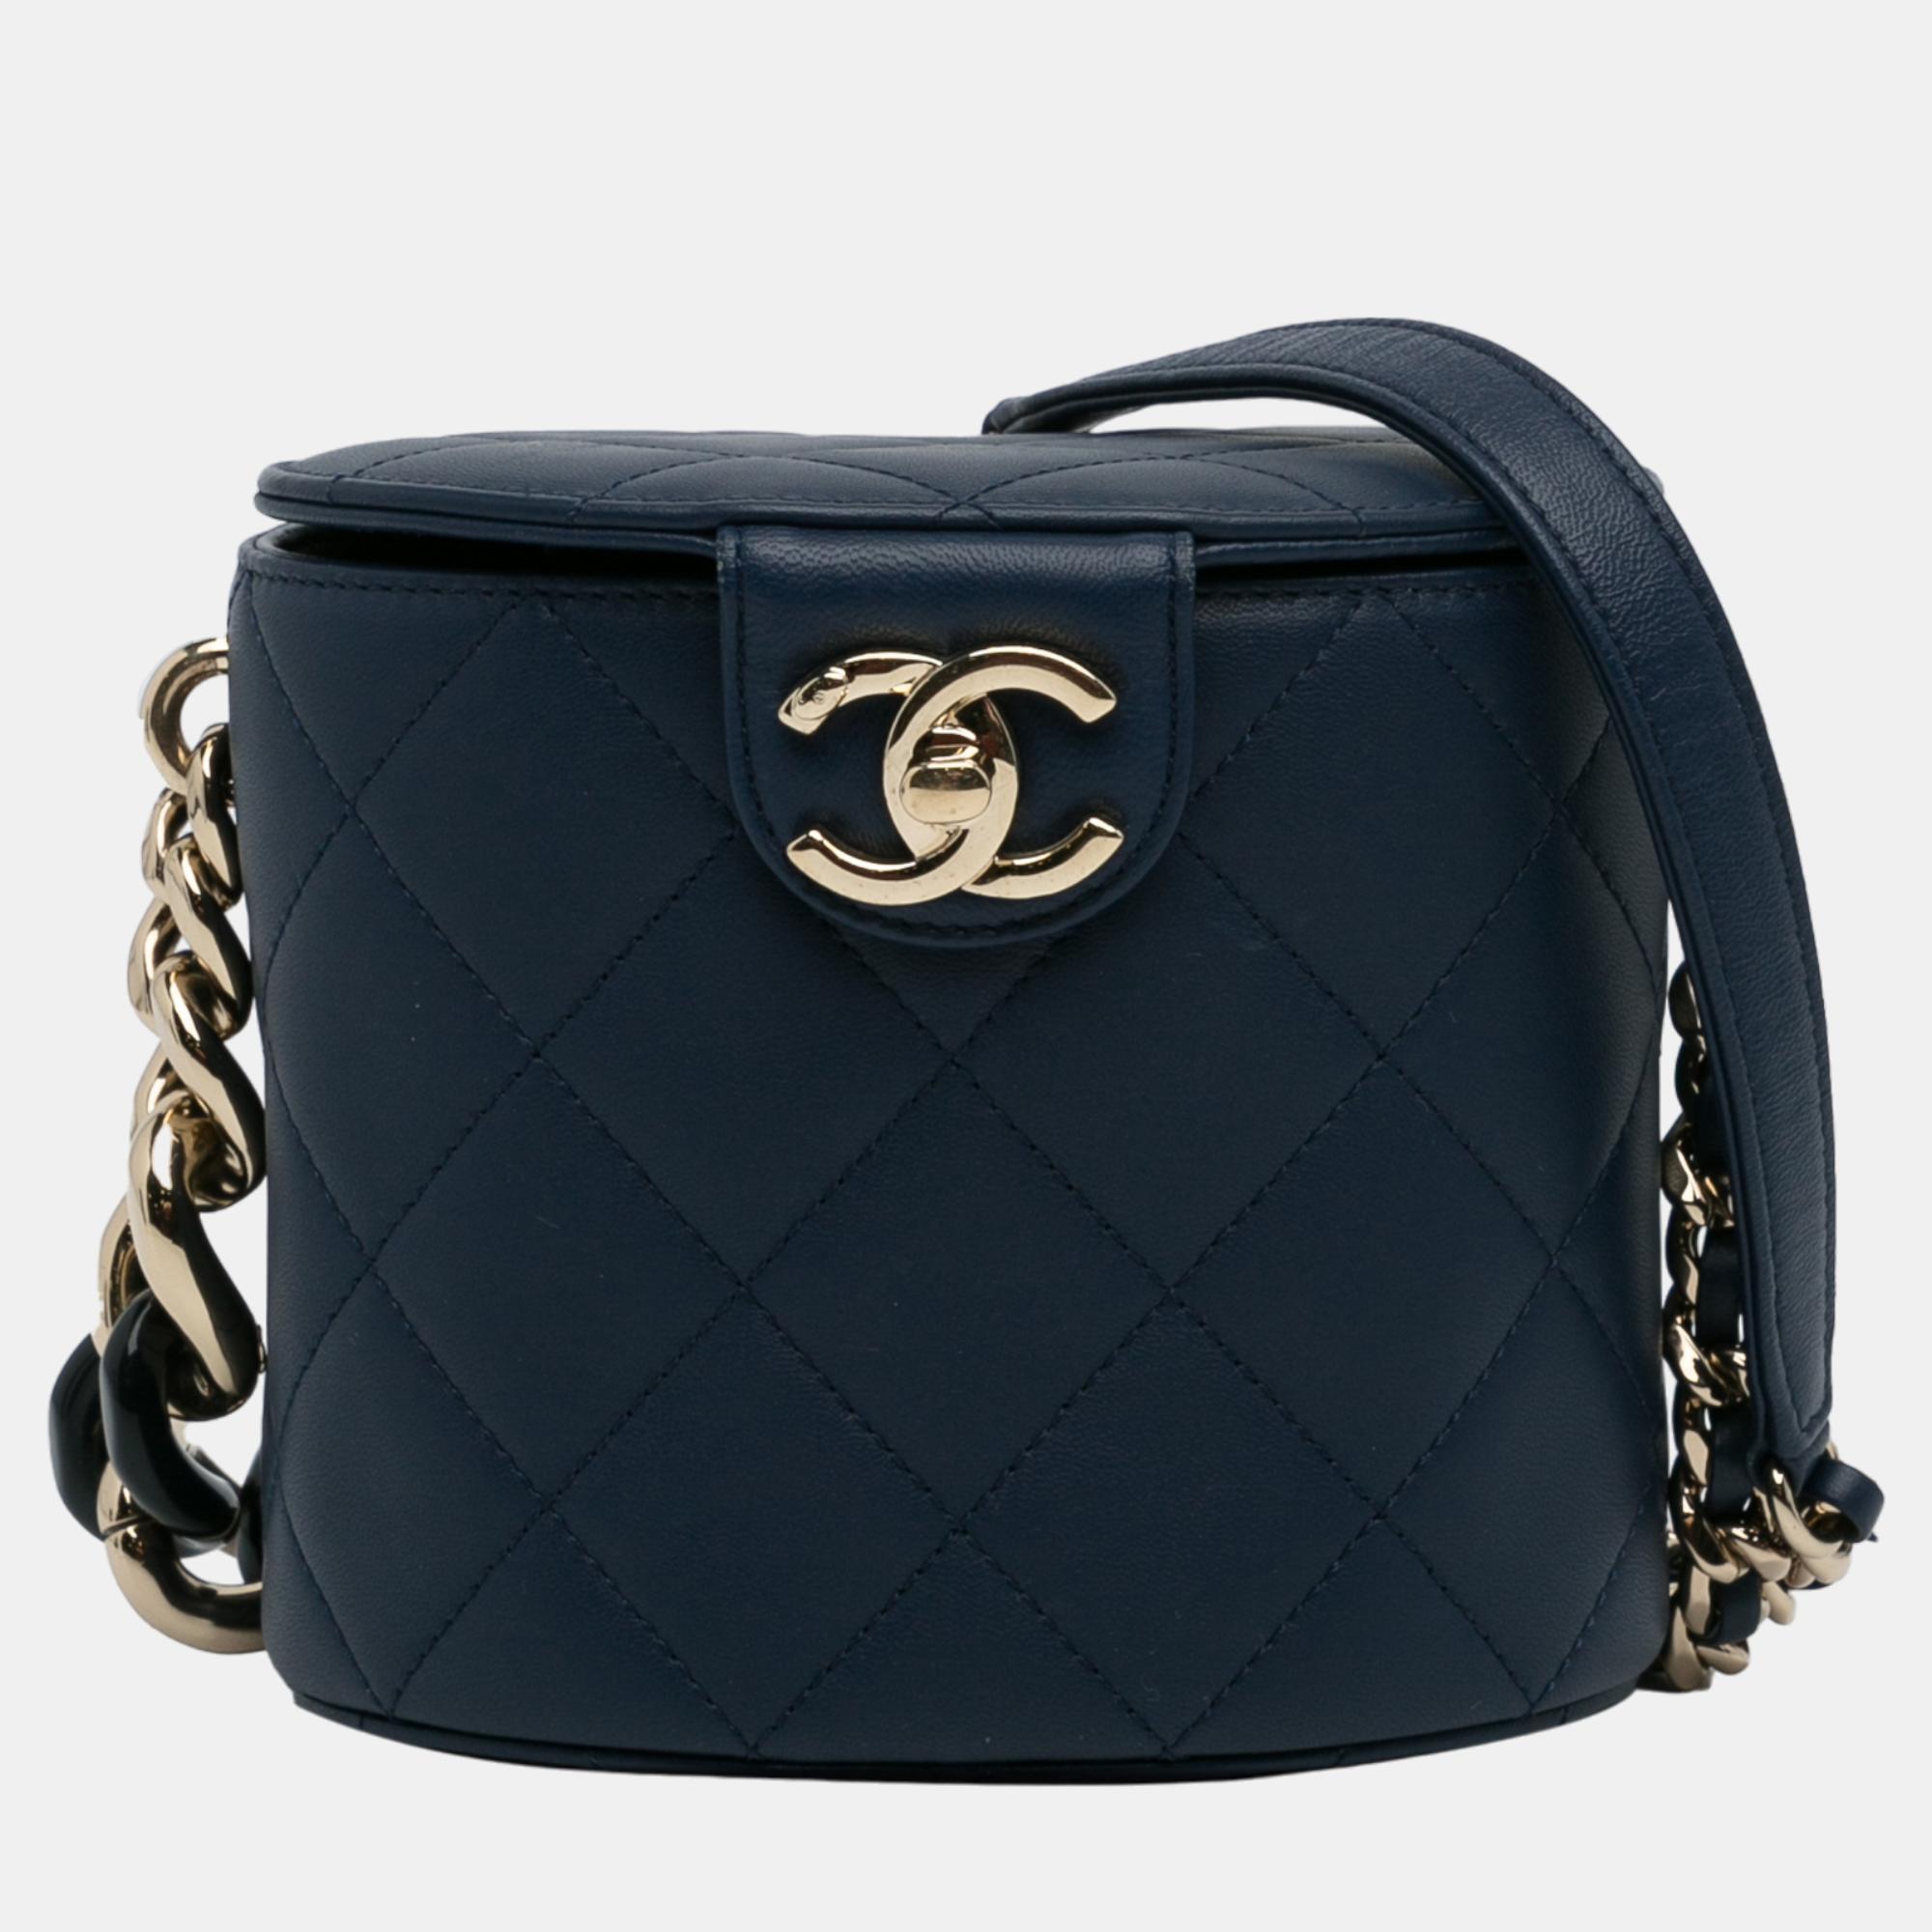 Chanel navy blue cc round vanity bag